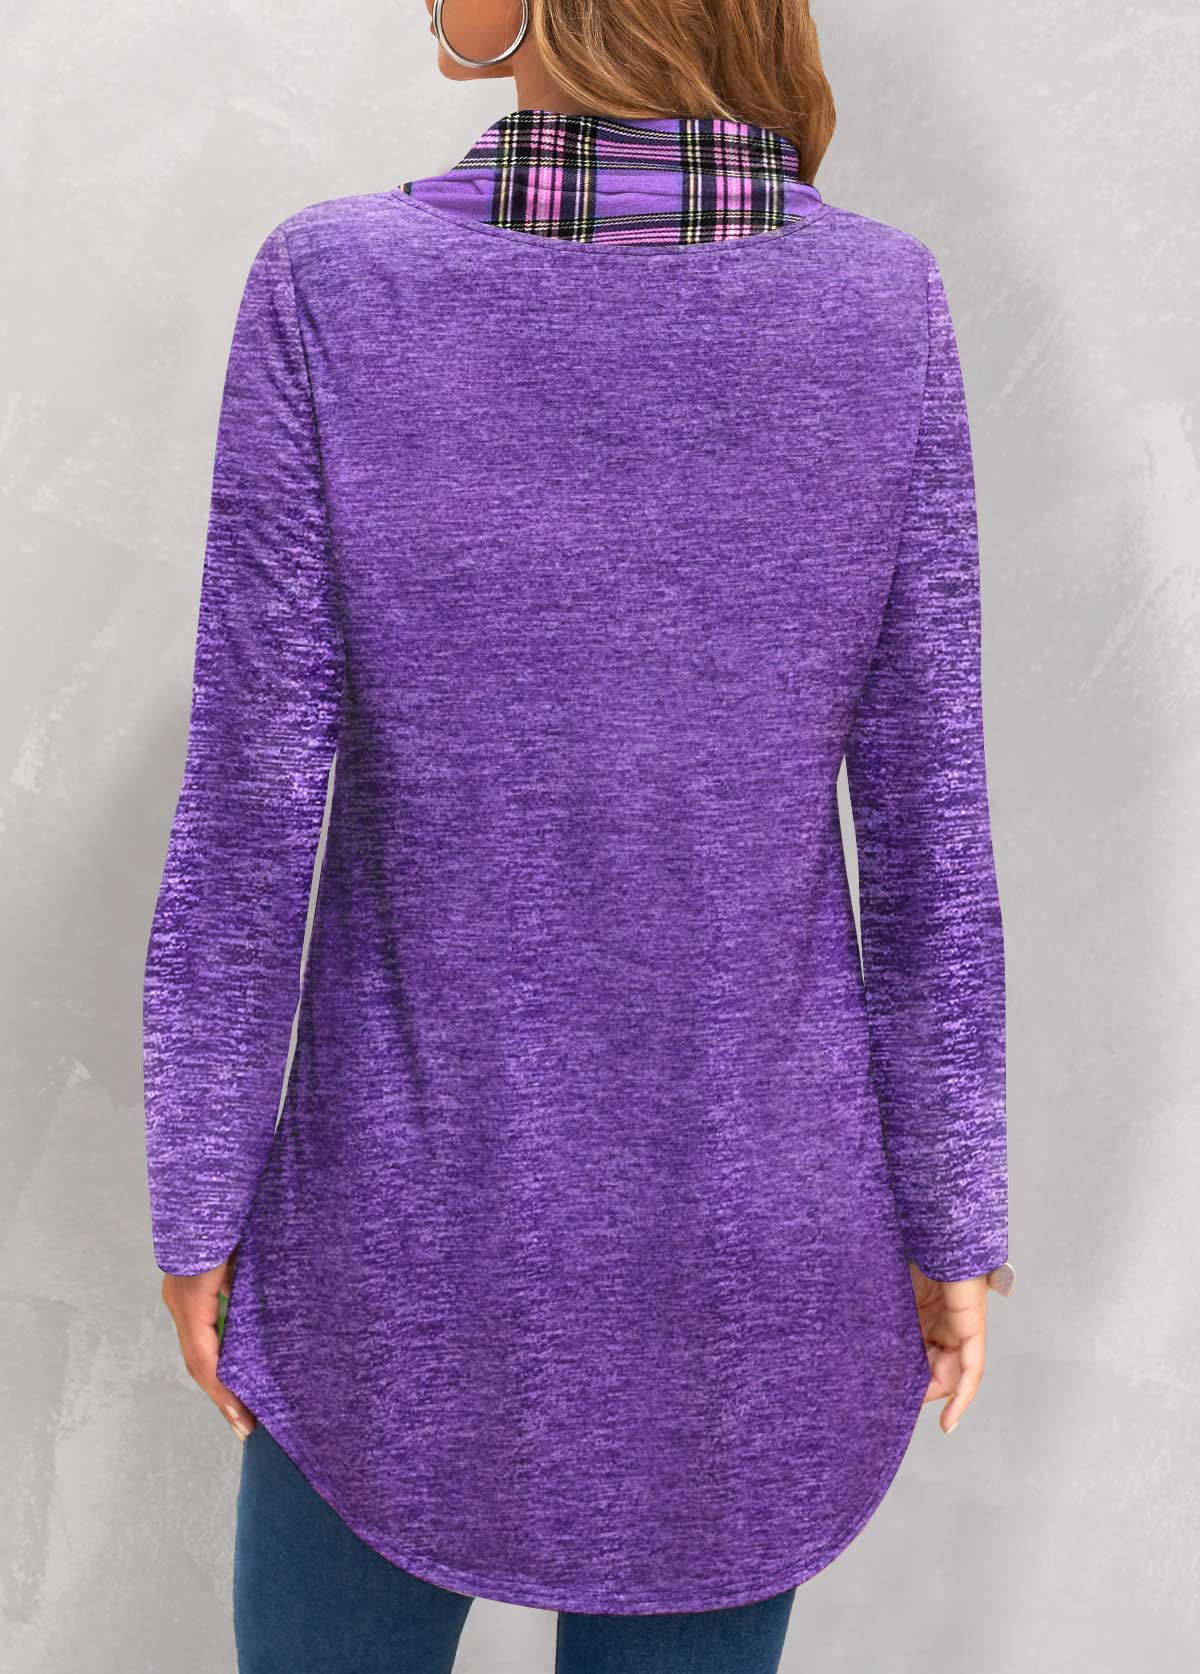 Plaid Patchwork Purple Cowl Neck Long Sleeve Sweatshirt